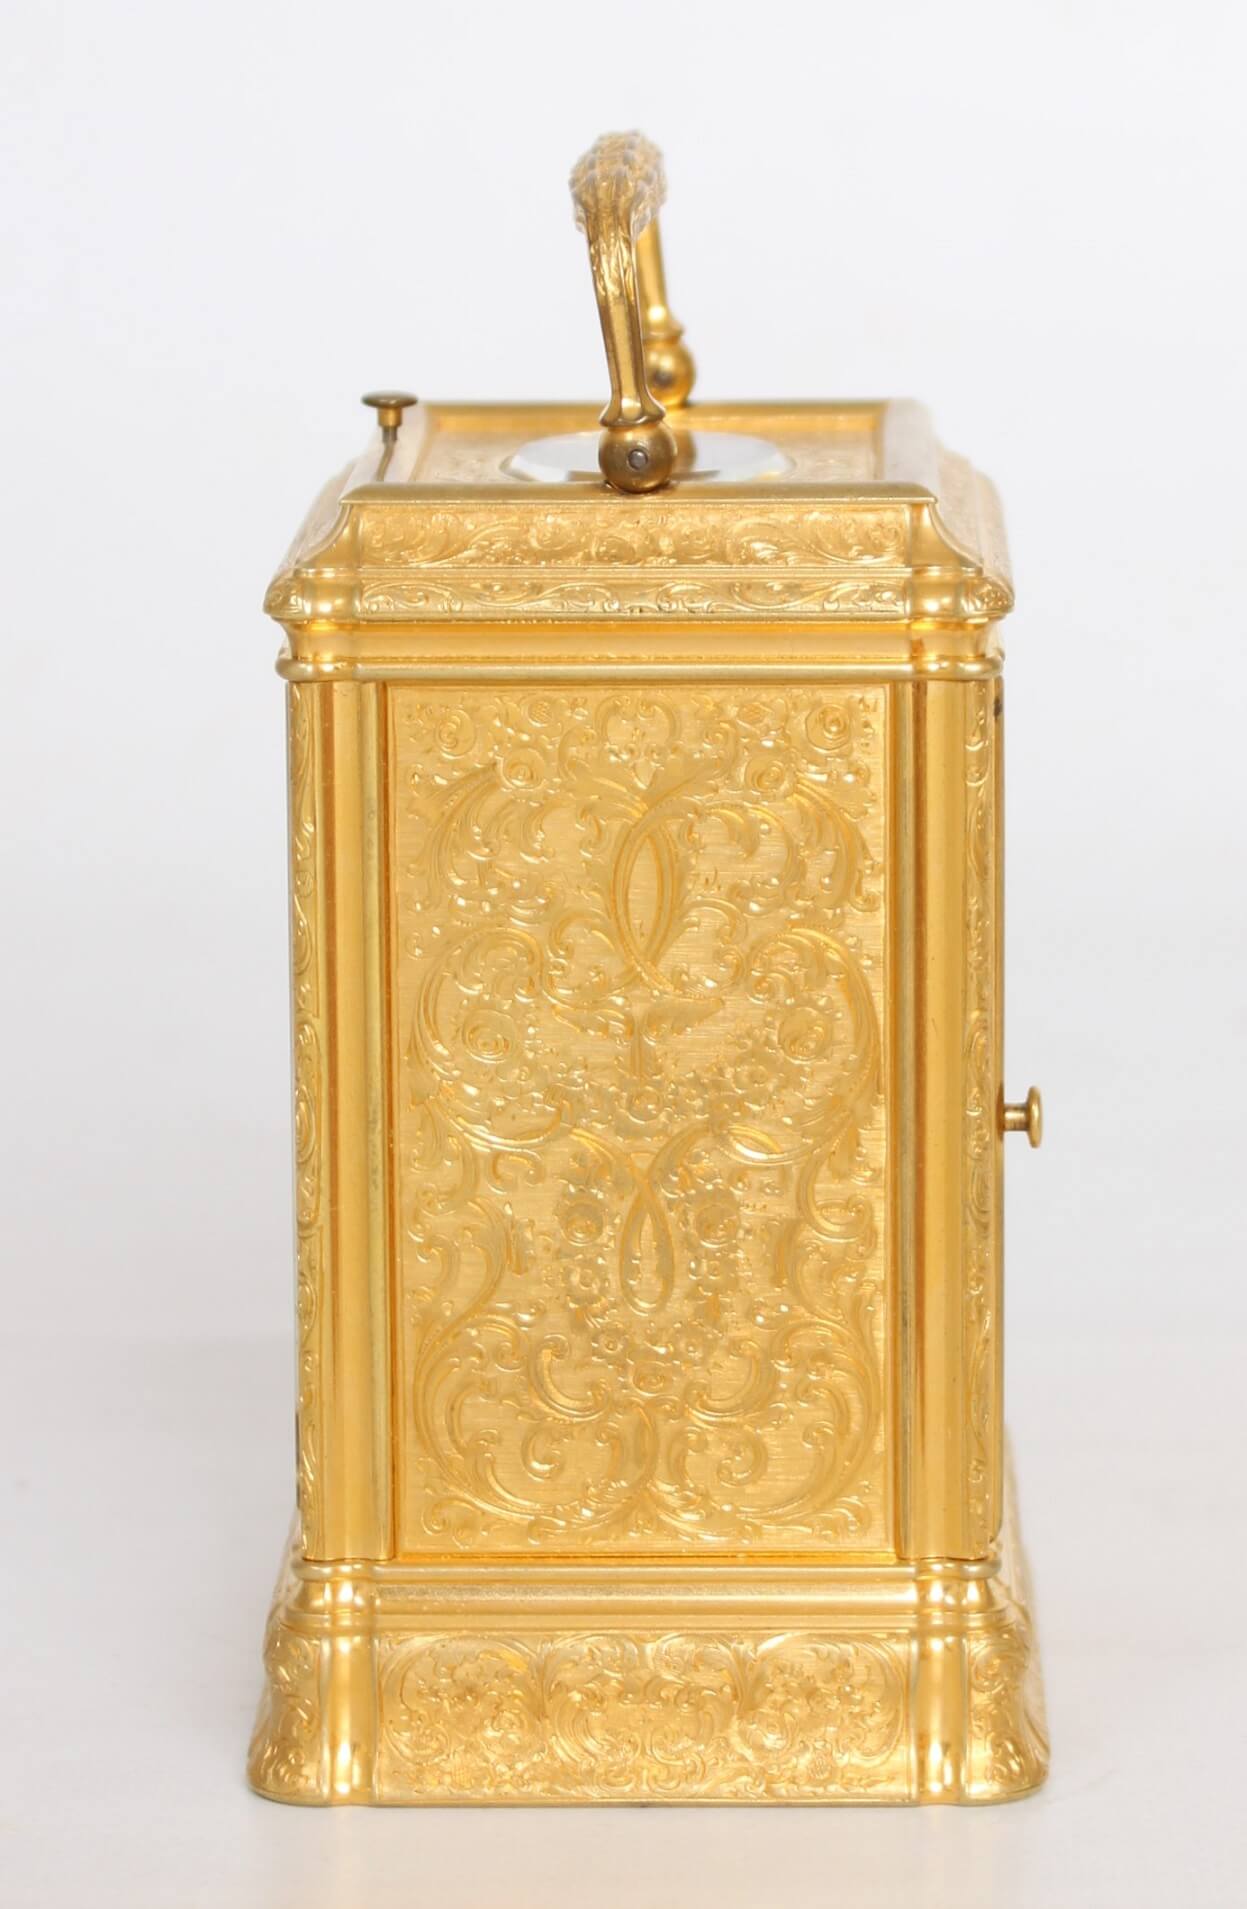 English-gorge case-carriage clock-quarter repeating-Dent-gilt brass-engraved